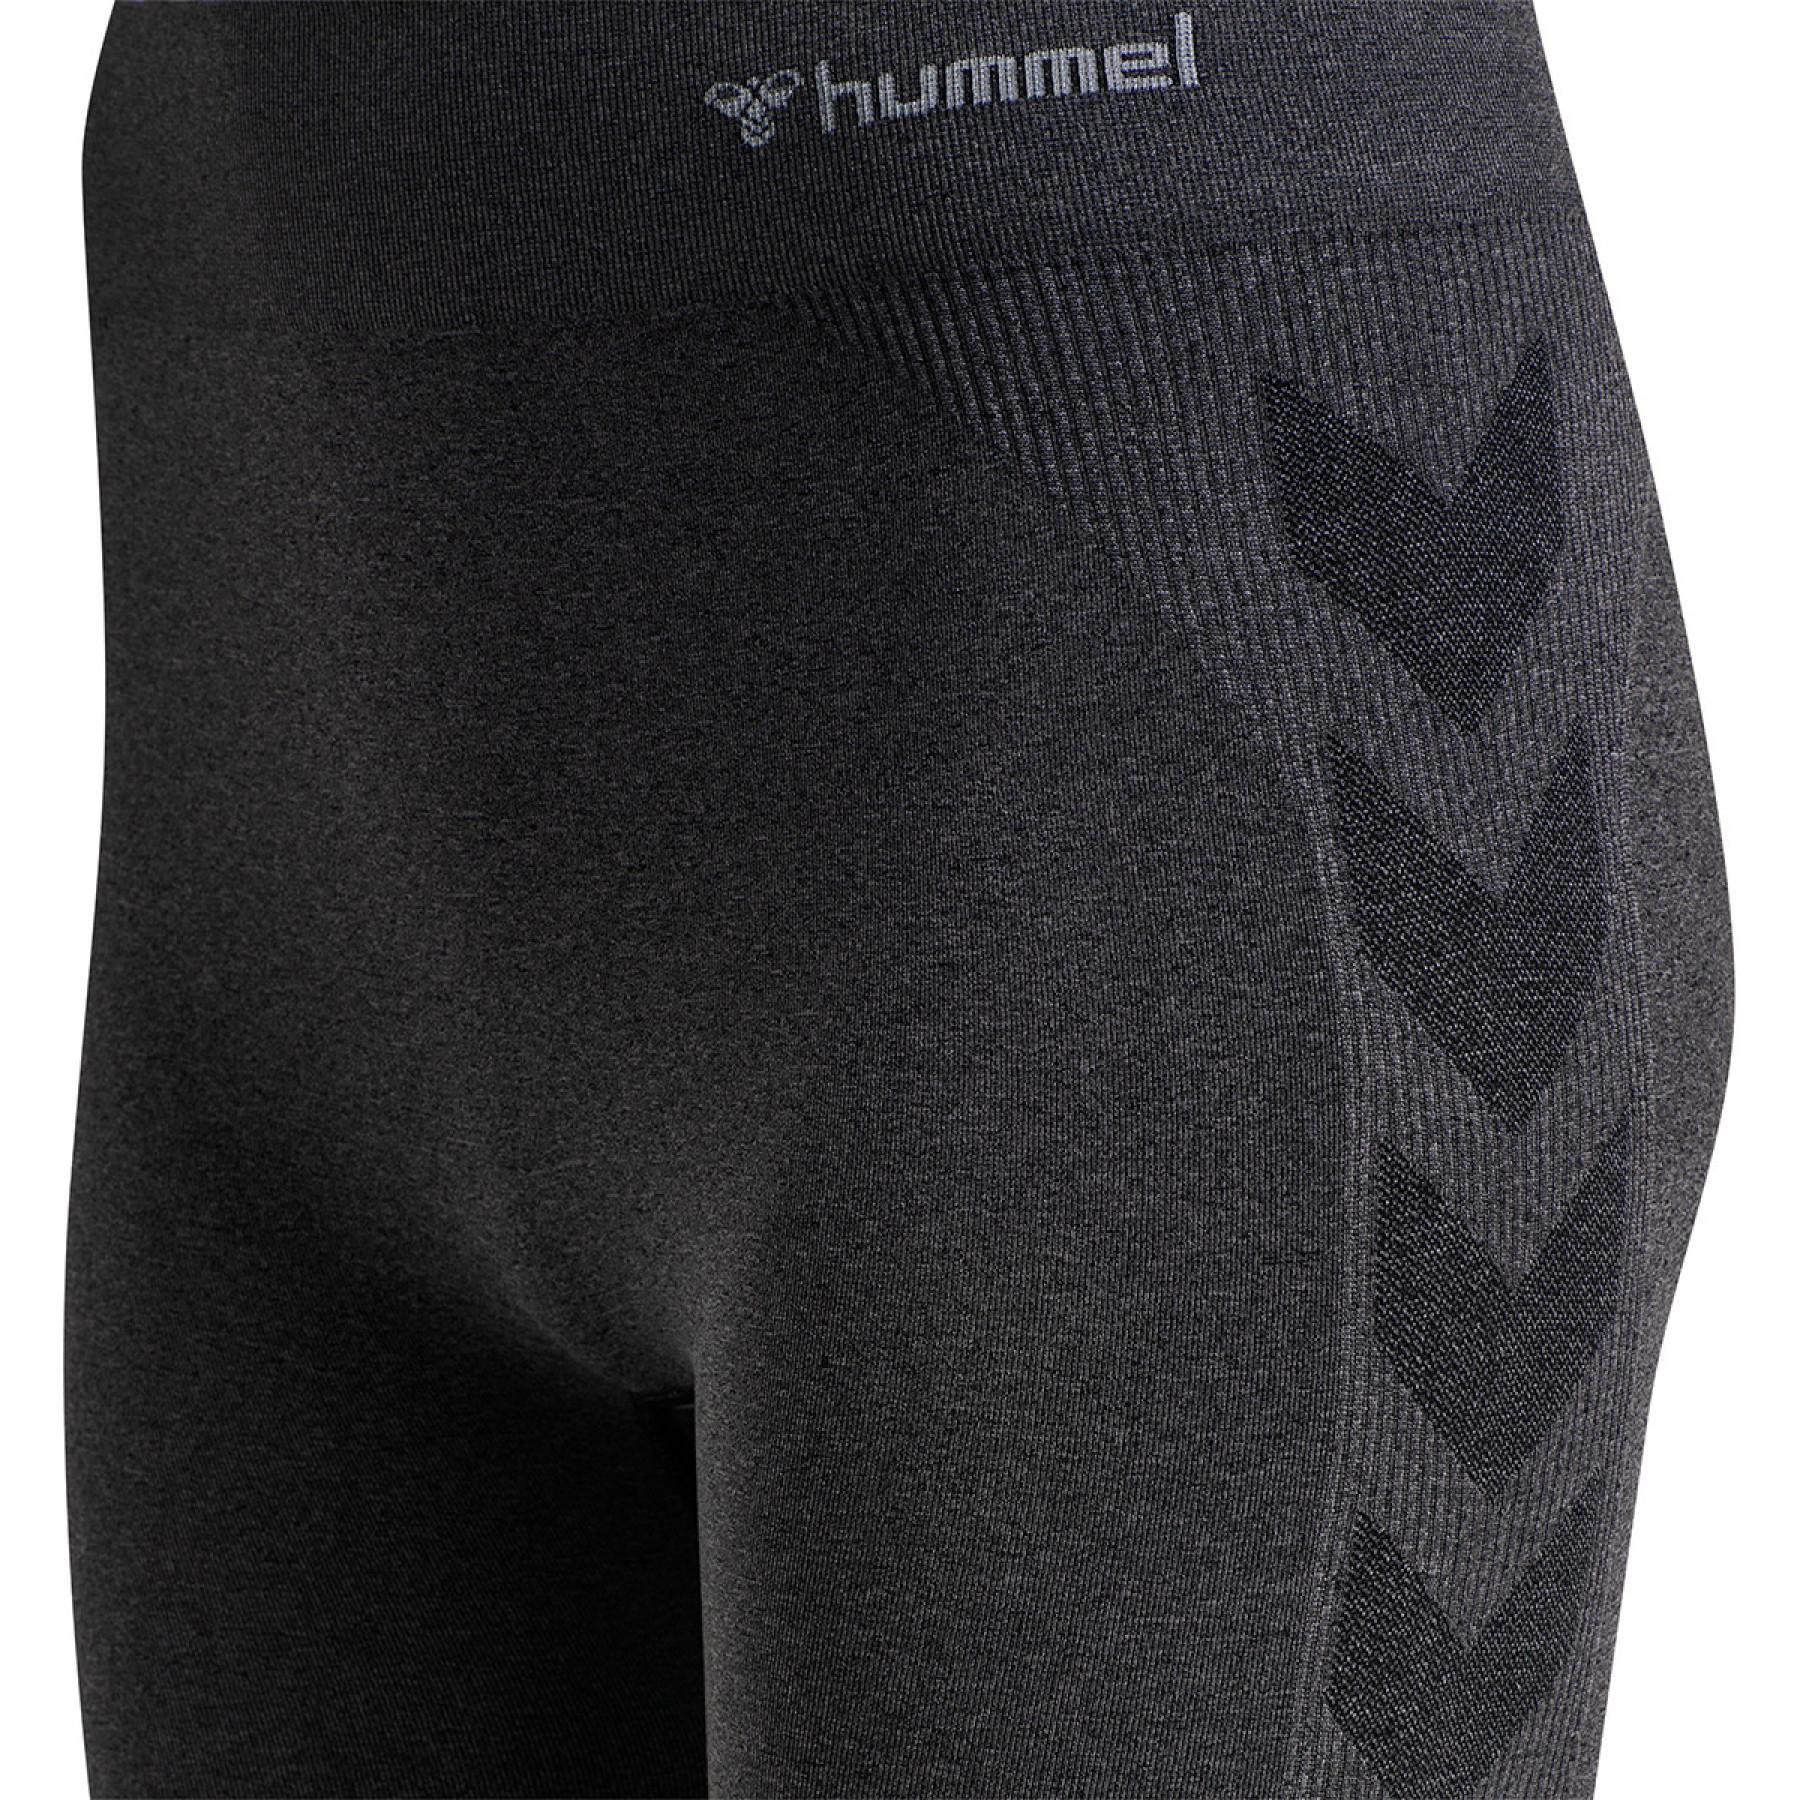 Legging femme Hummel hmlci mid waist